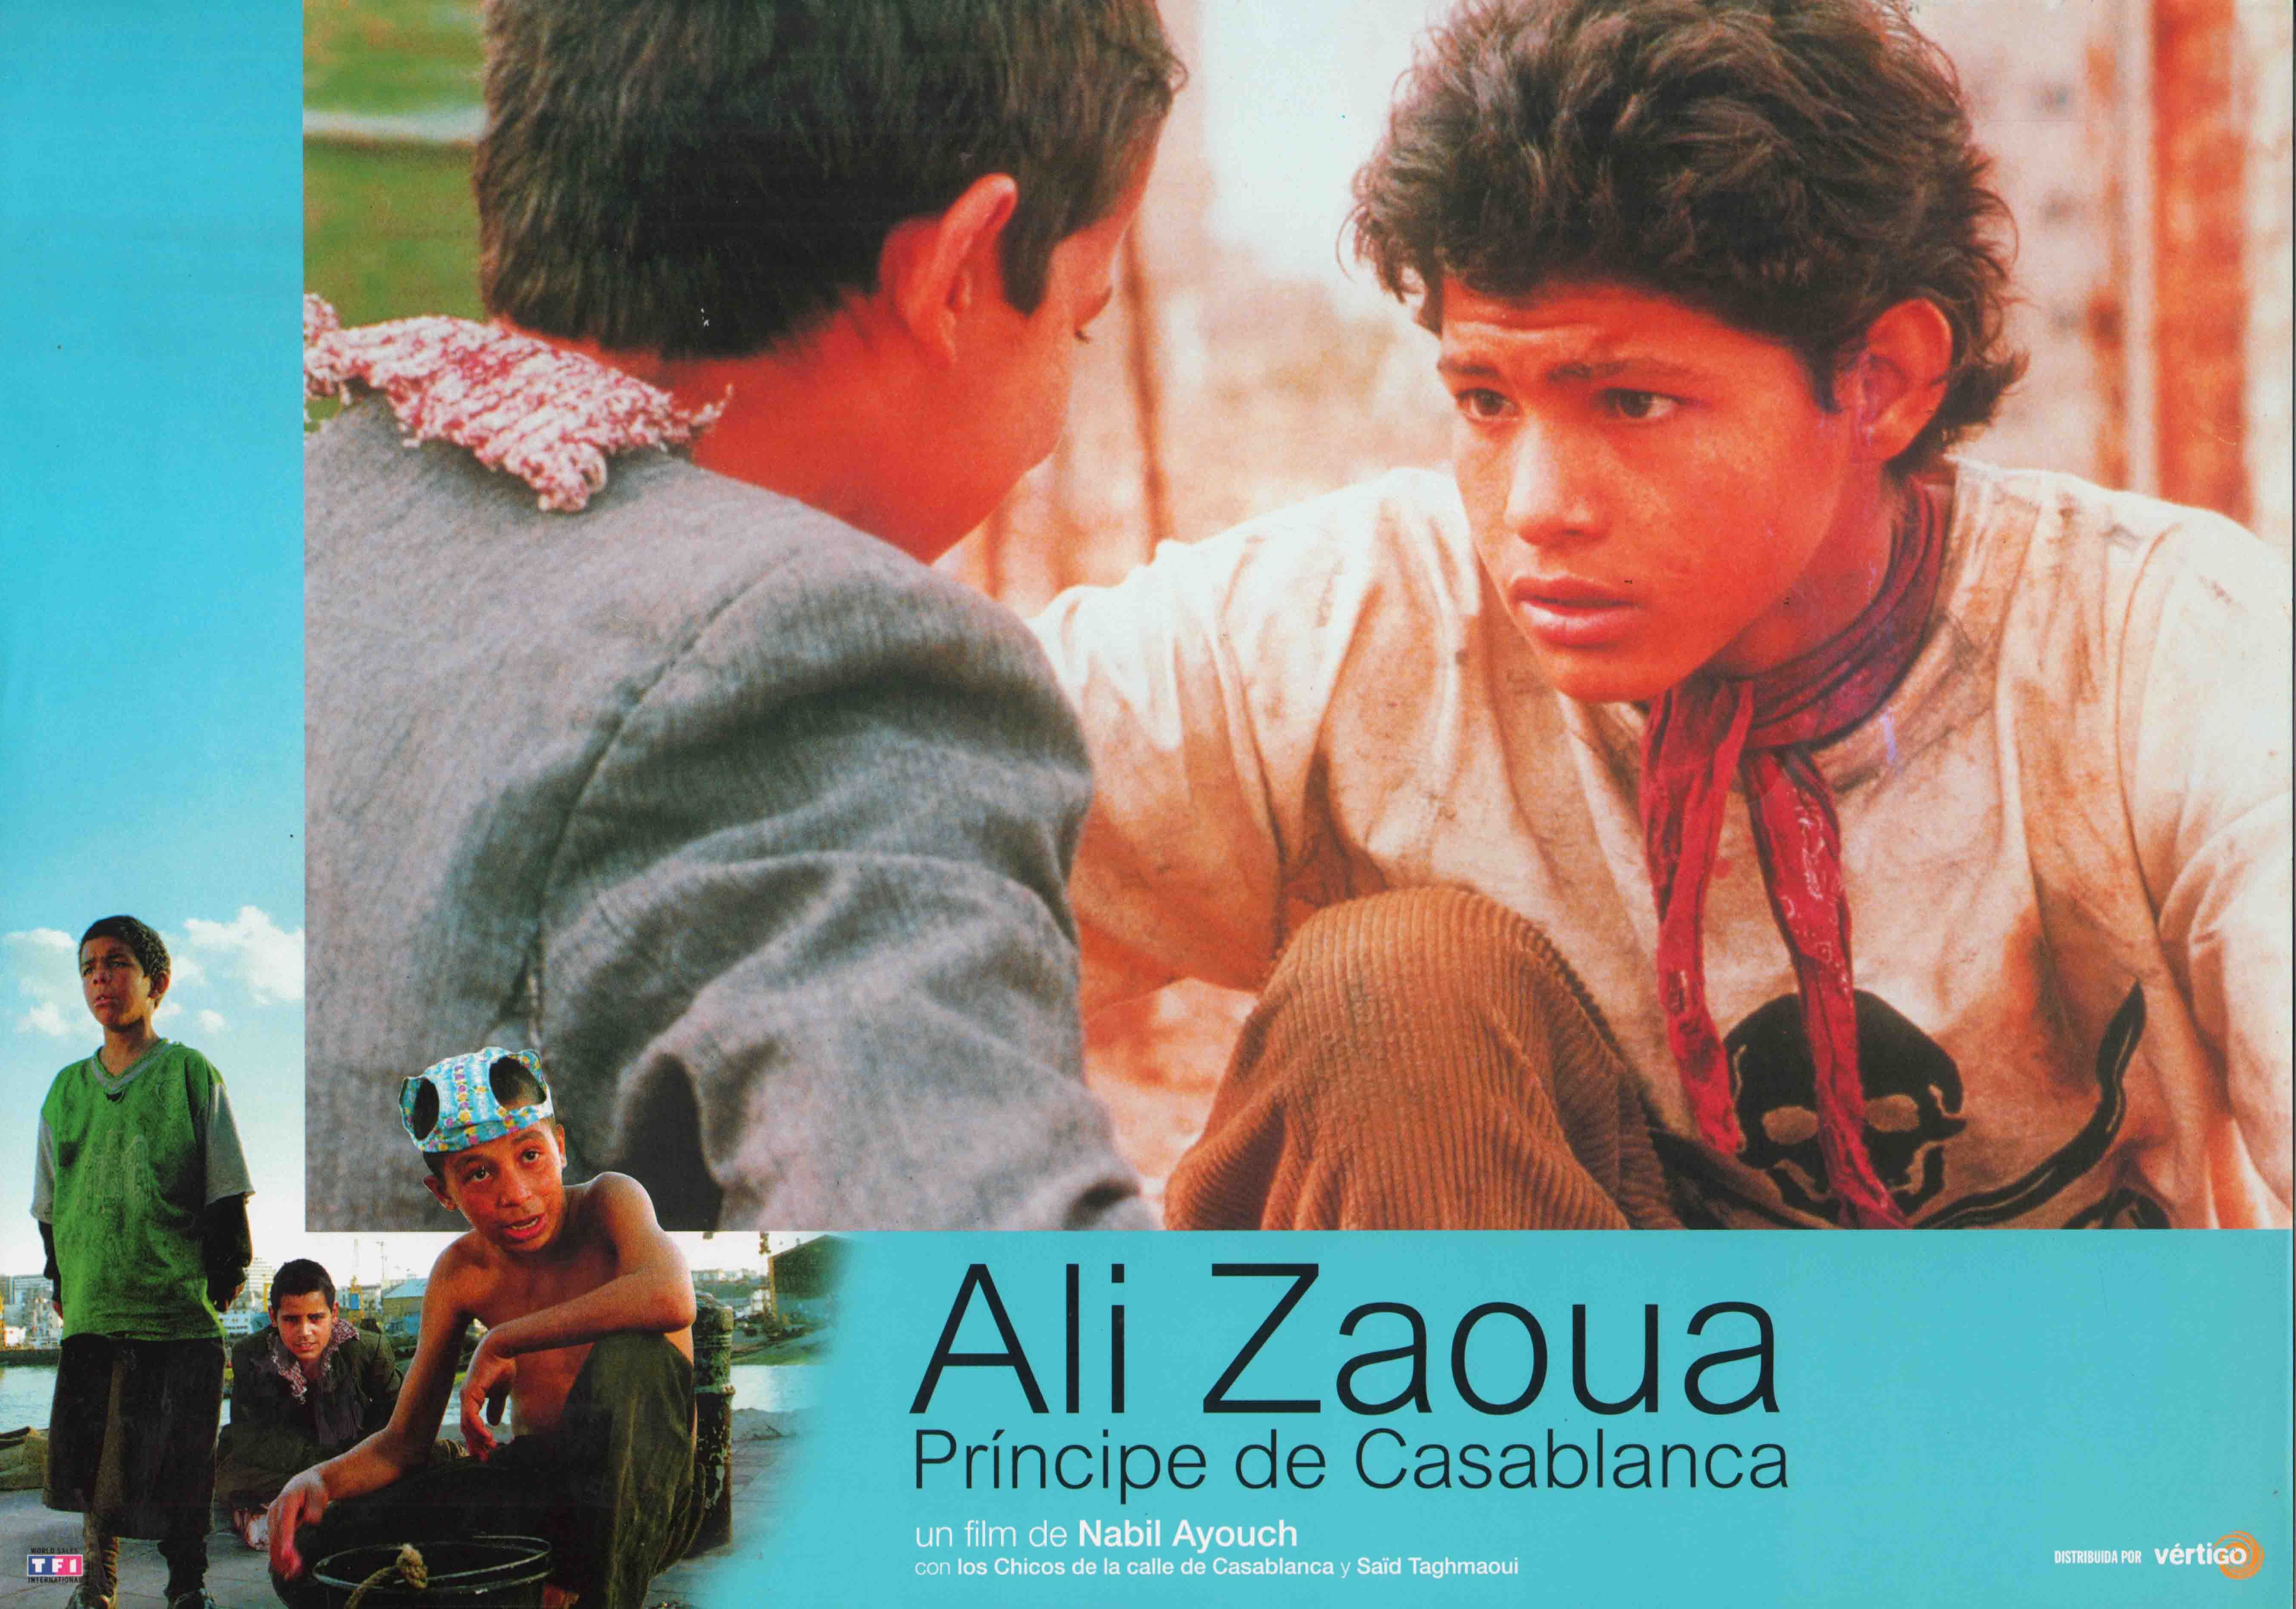 Ali Zoua: Prince of the Streets